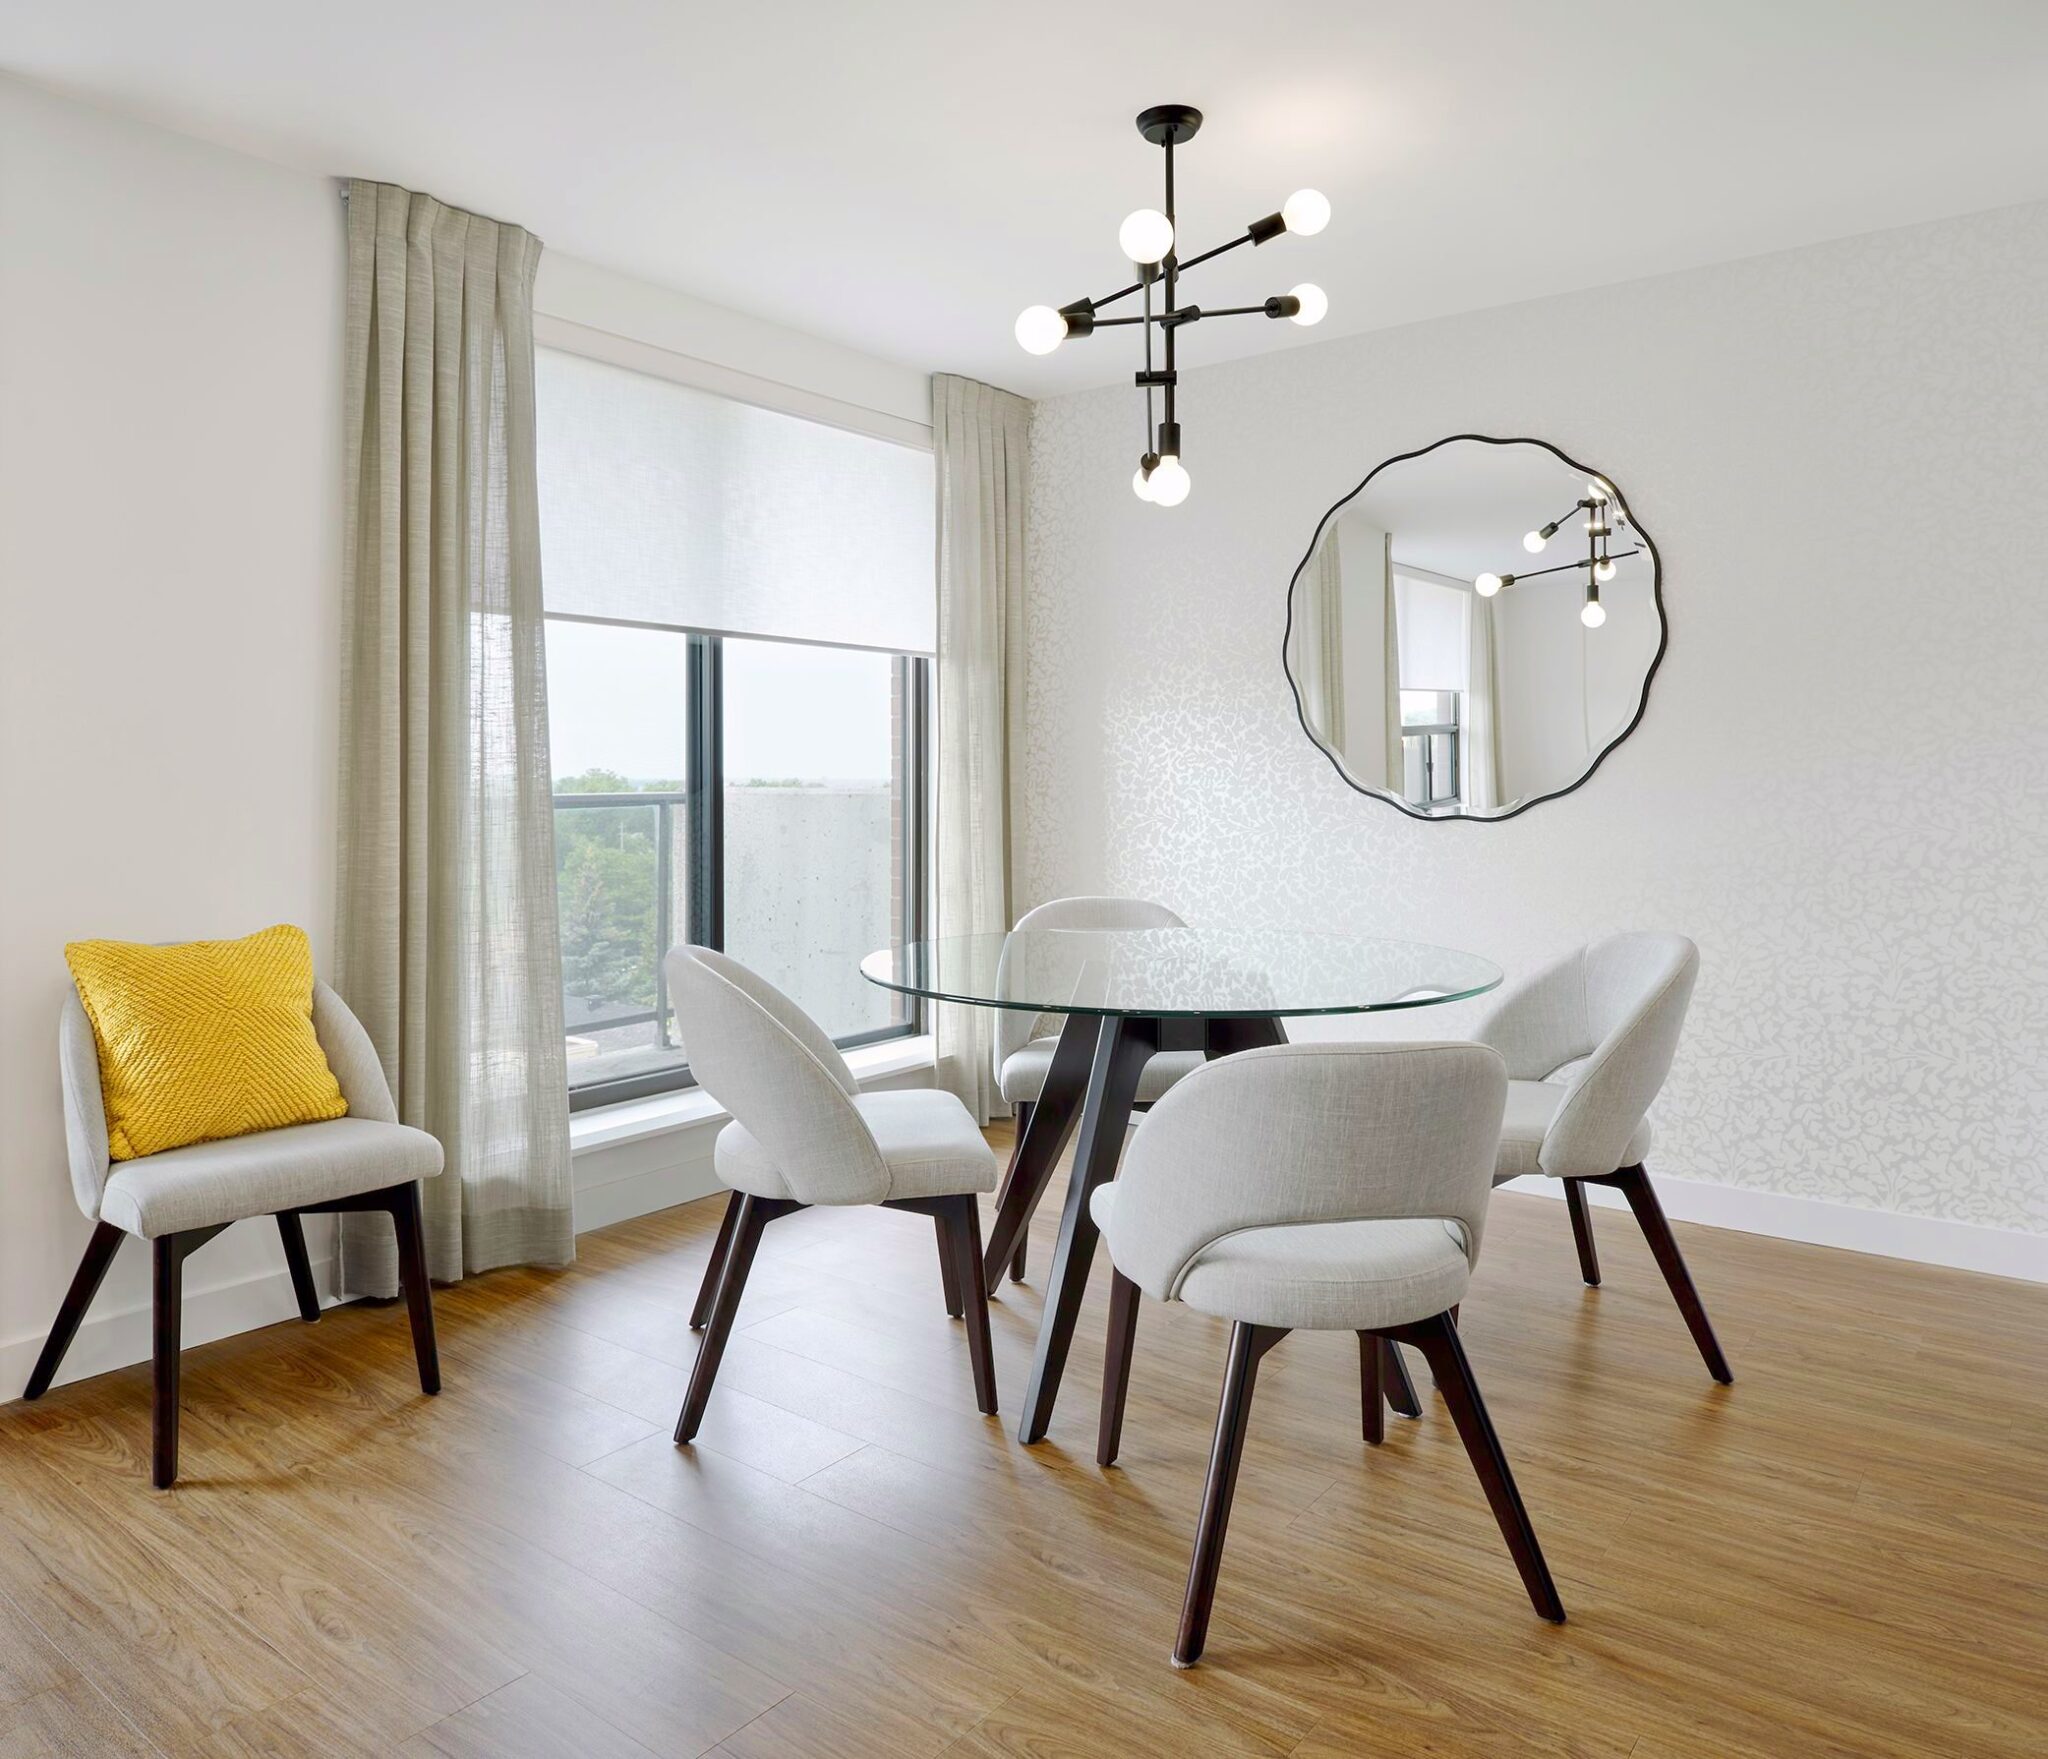 Keeping It Simple With Minimalist Interior Design